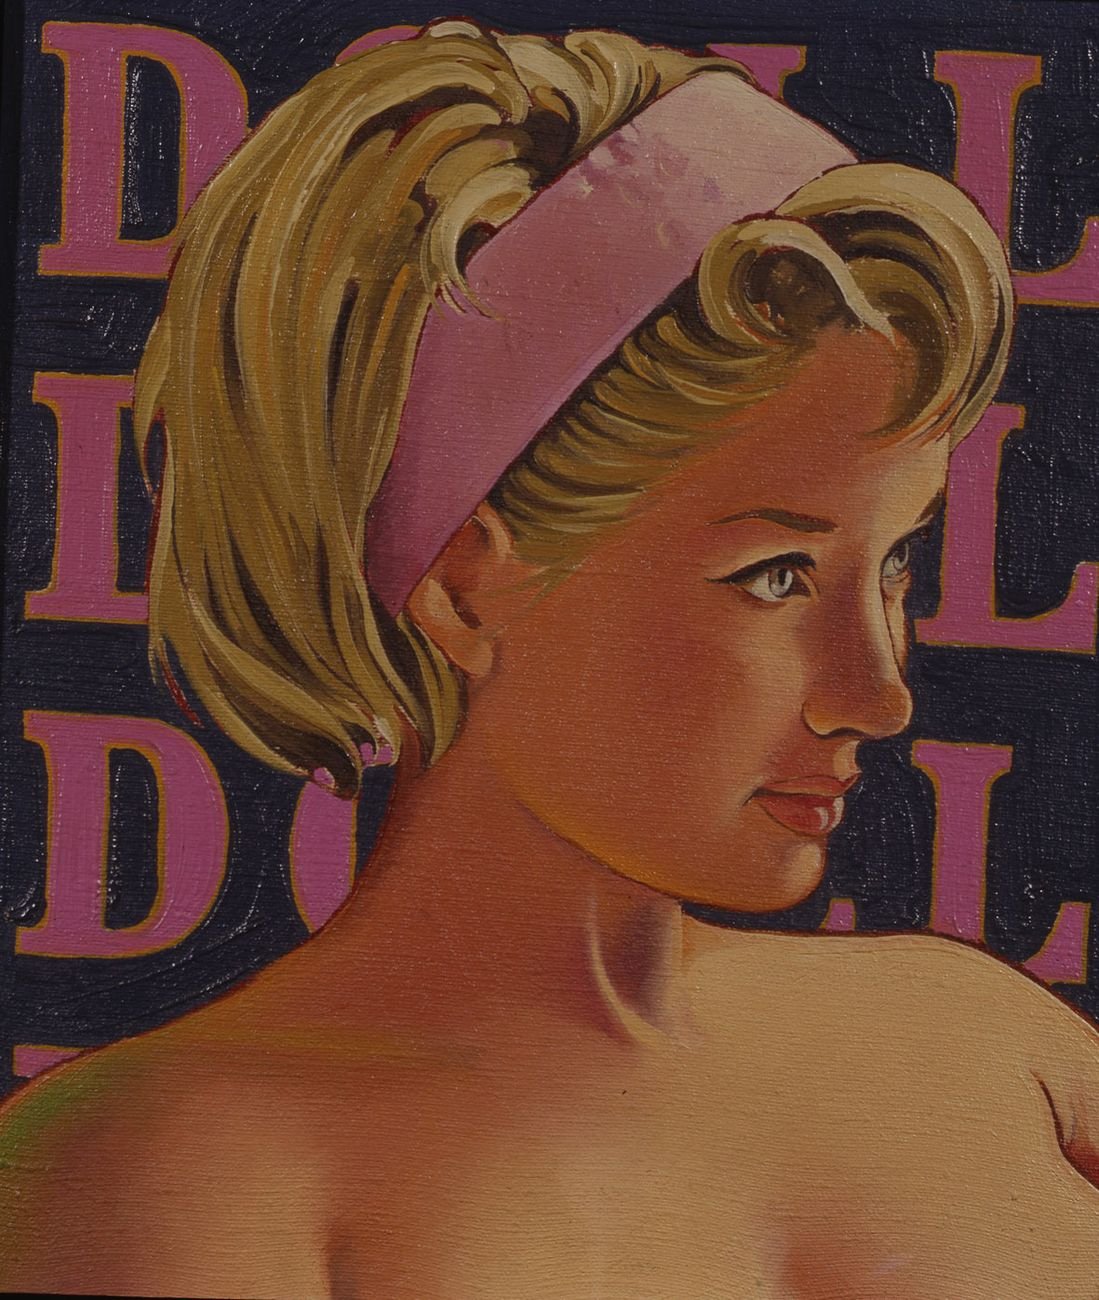 Mel Ramos, Doll, 1964